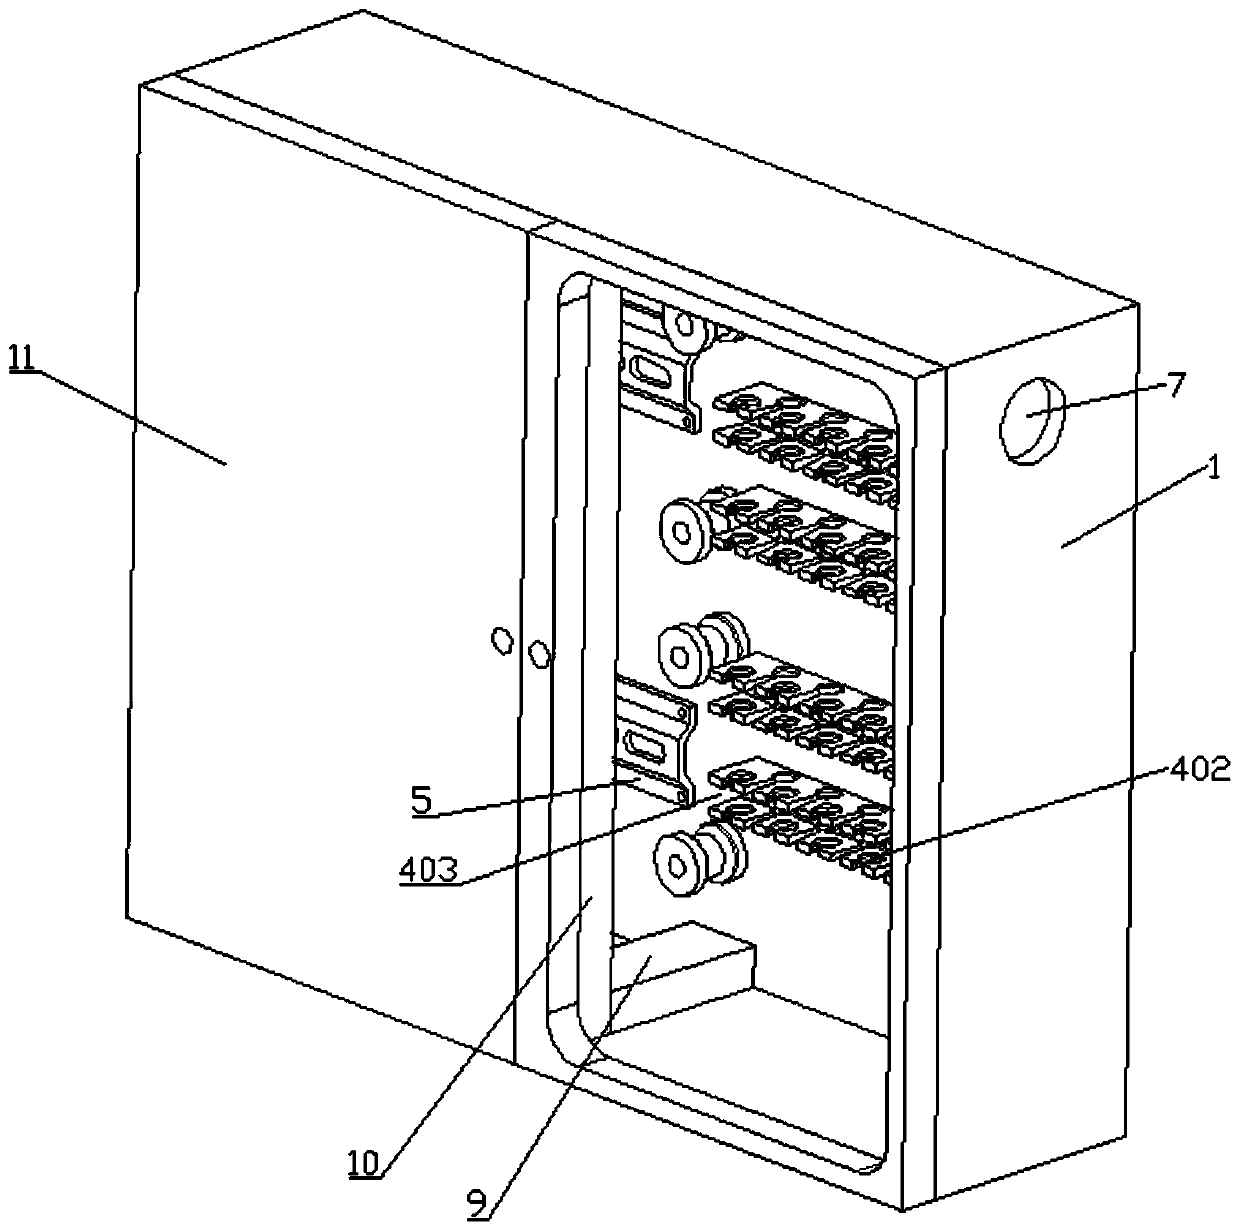 Low-voltage intelligent fee-control meter box